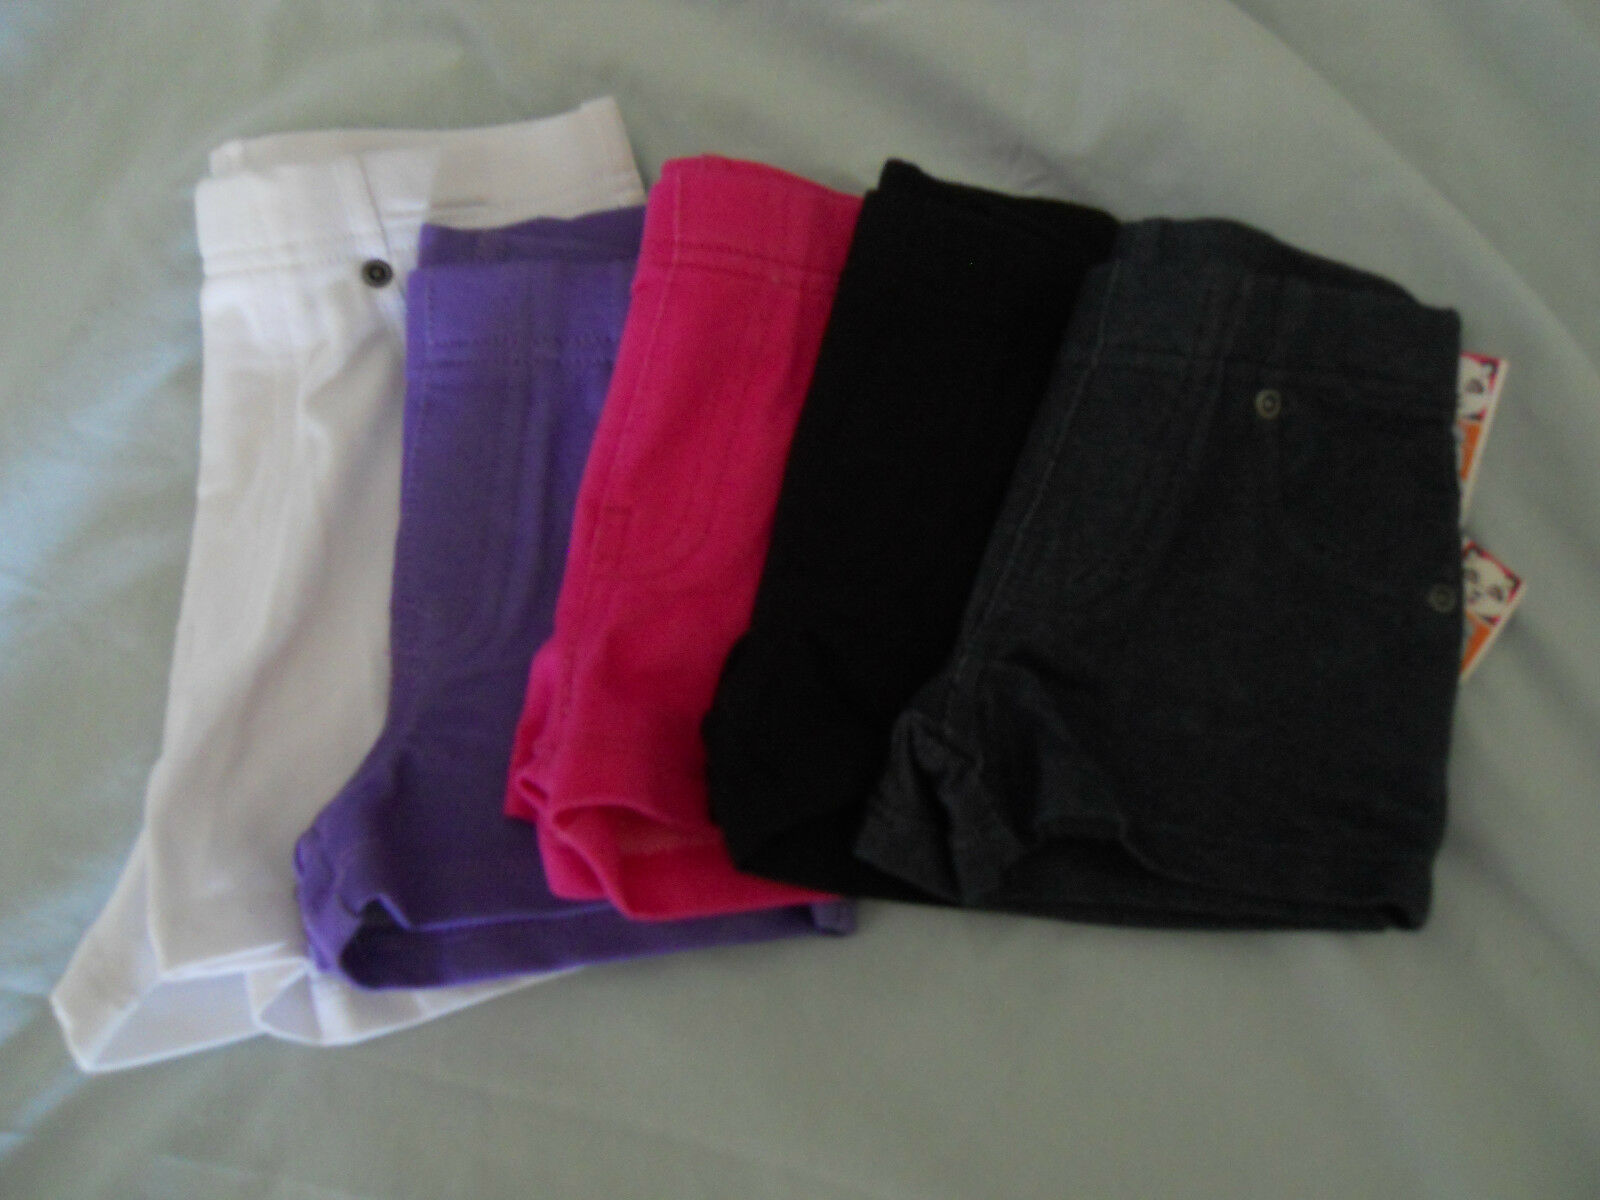 NEW Girls Knit Shorts Sz 12m 18M 24M 2T 3T 4T 5T Pink Black Blue Purple White  - $9.99